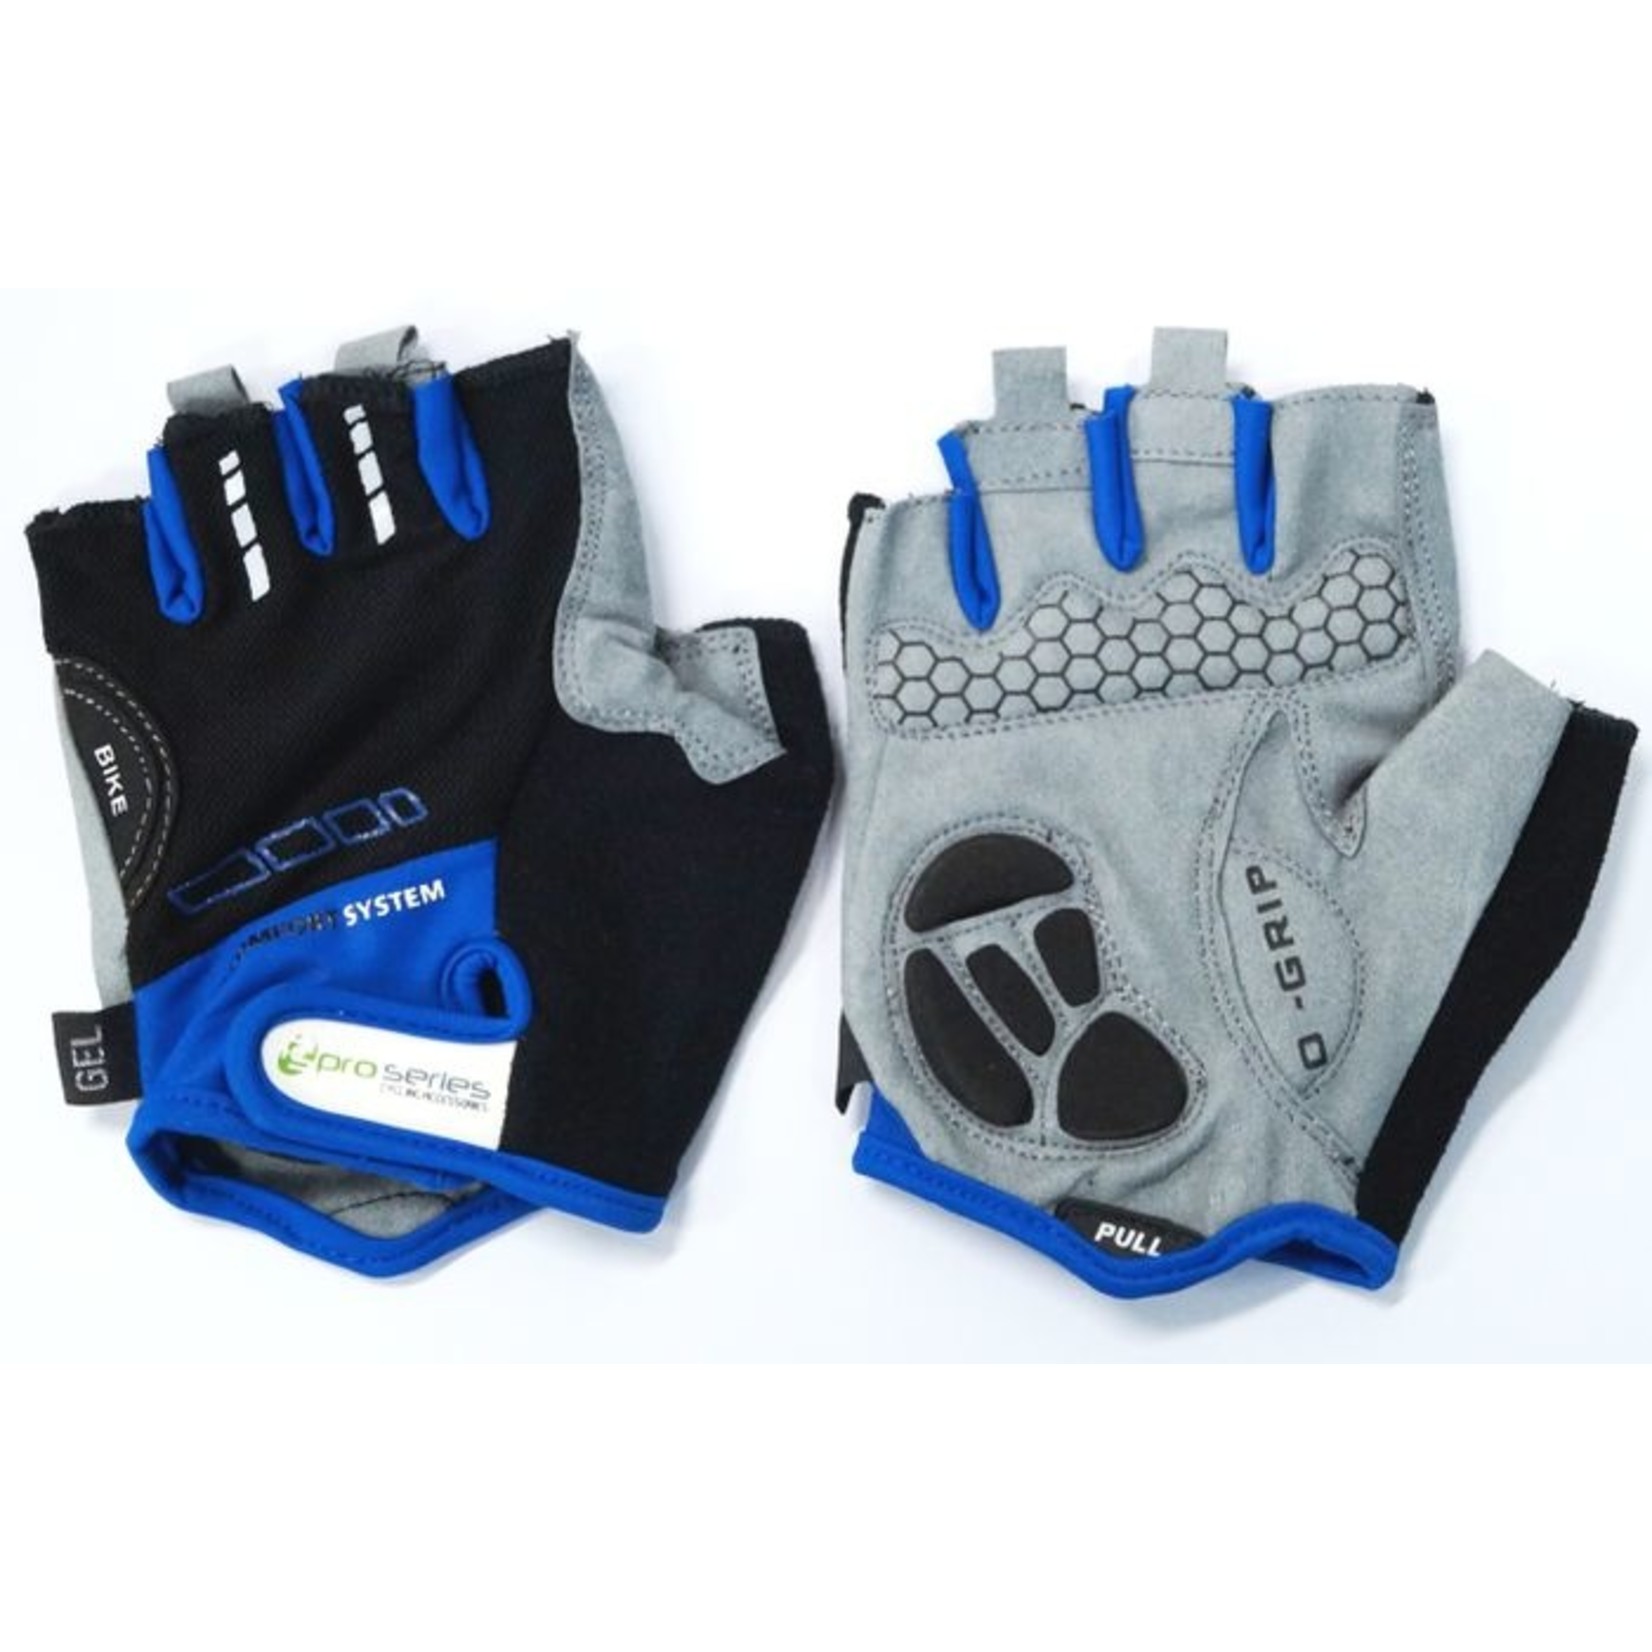 Pro Series Pro-Series - Gloves - Amara Material With Gel Padding - Large - Black/Blue Trim